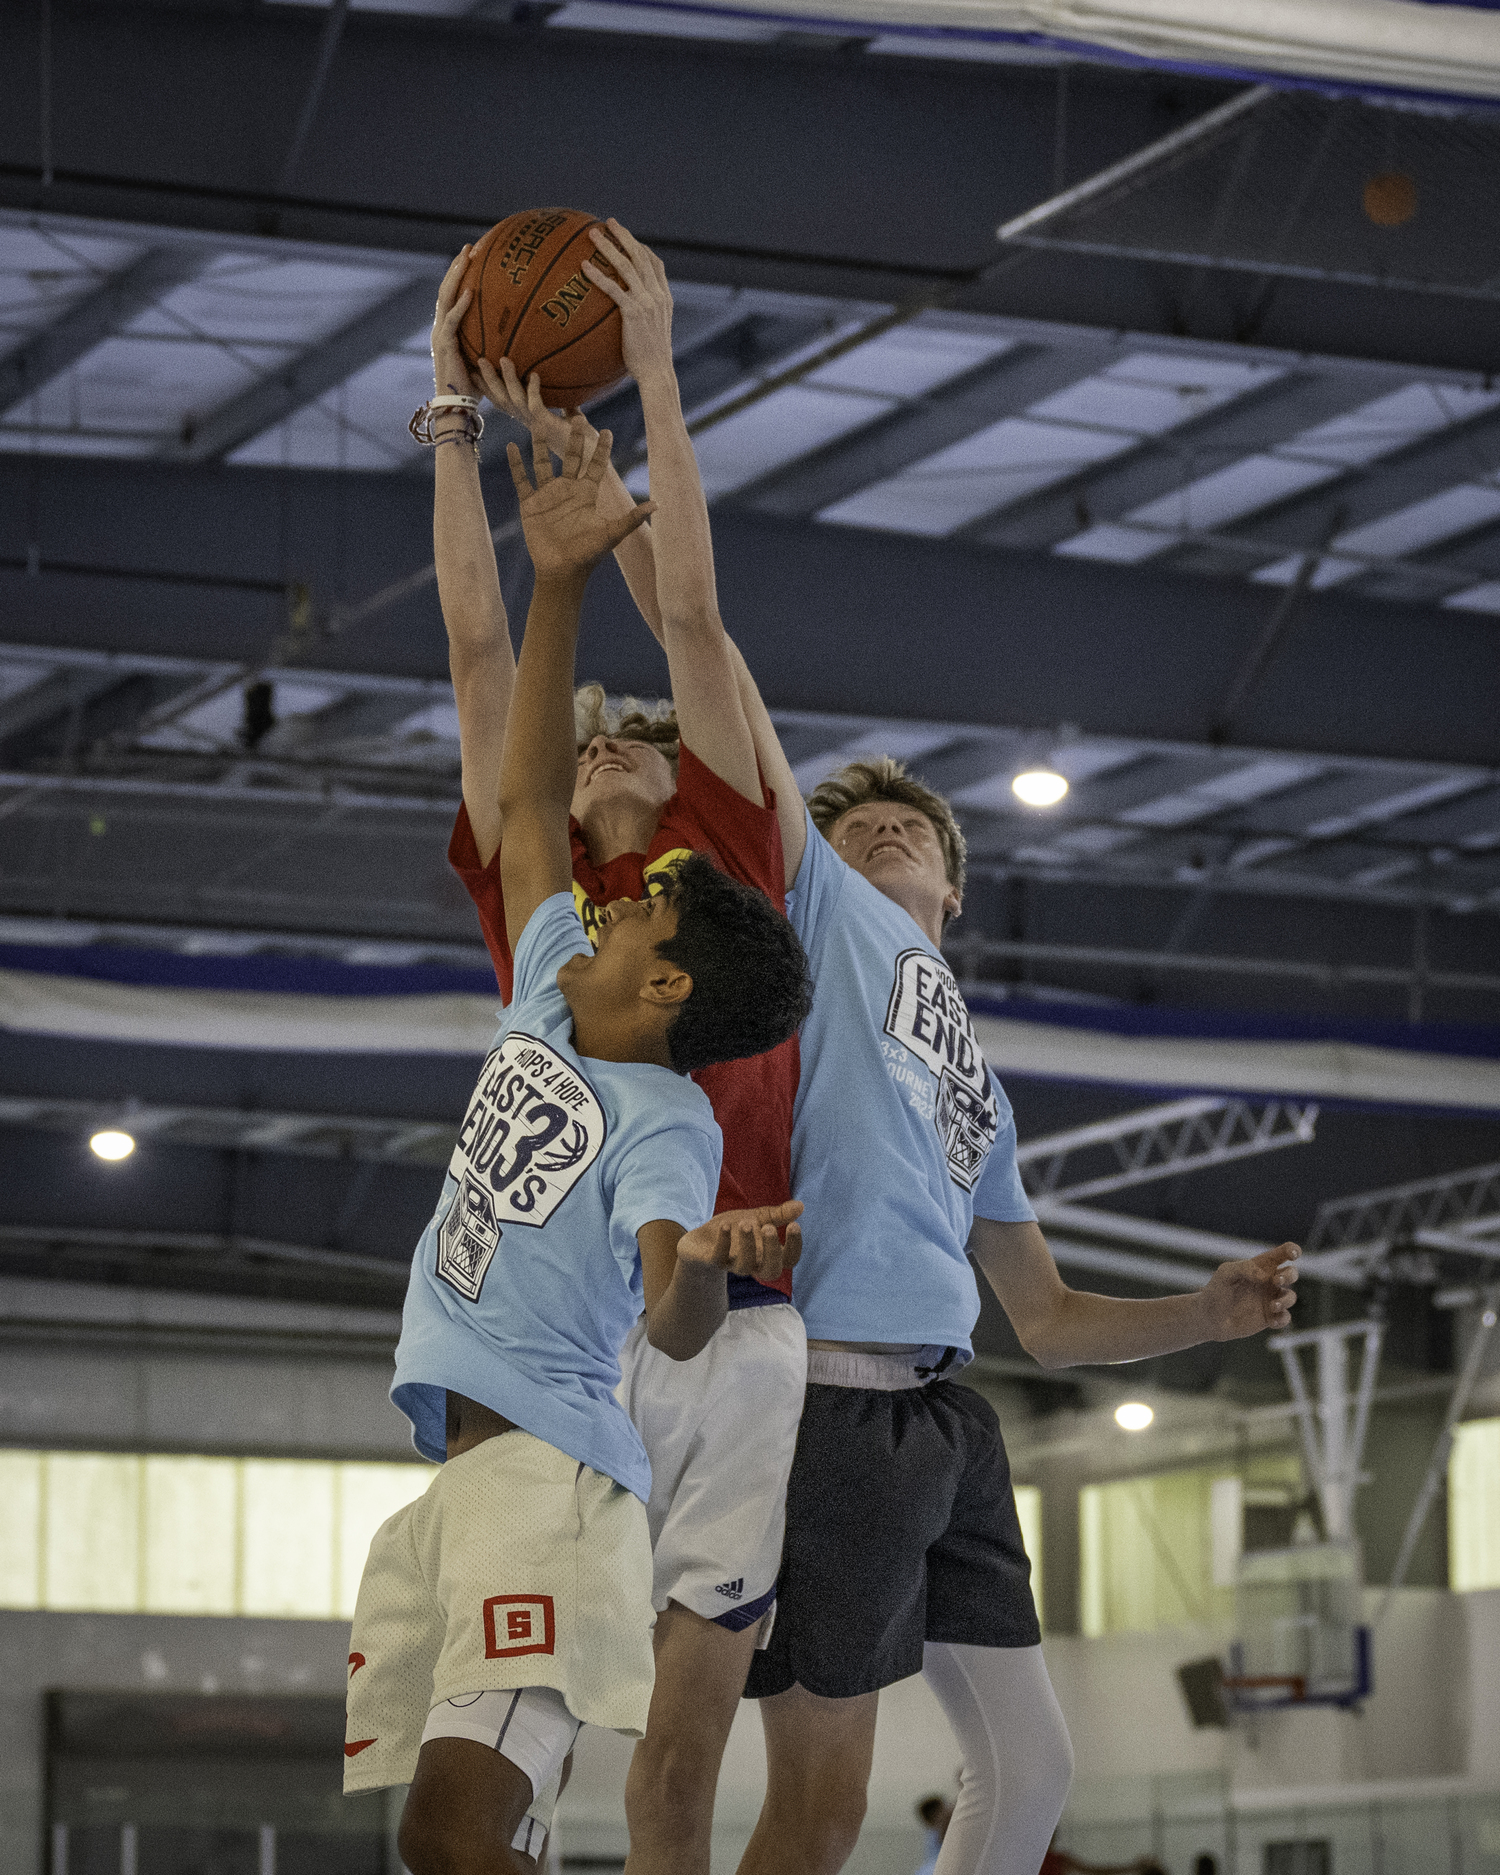 The Hoops 4 Hope 3-on-3 basketball tournament was held at Sportime Amagansett on Saturday.    MARIANNE BARNETT